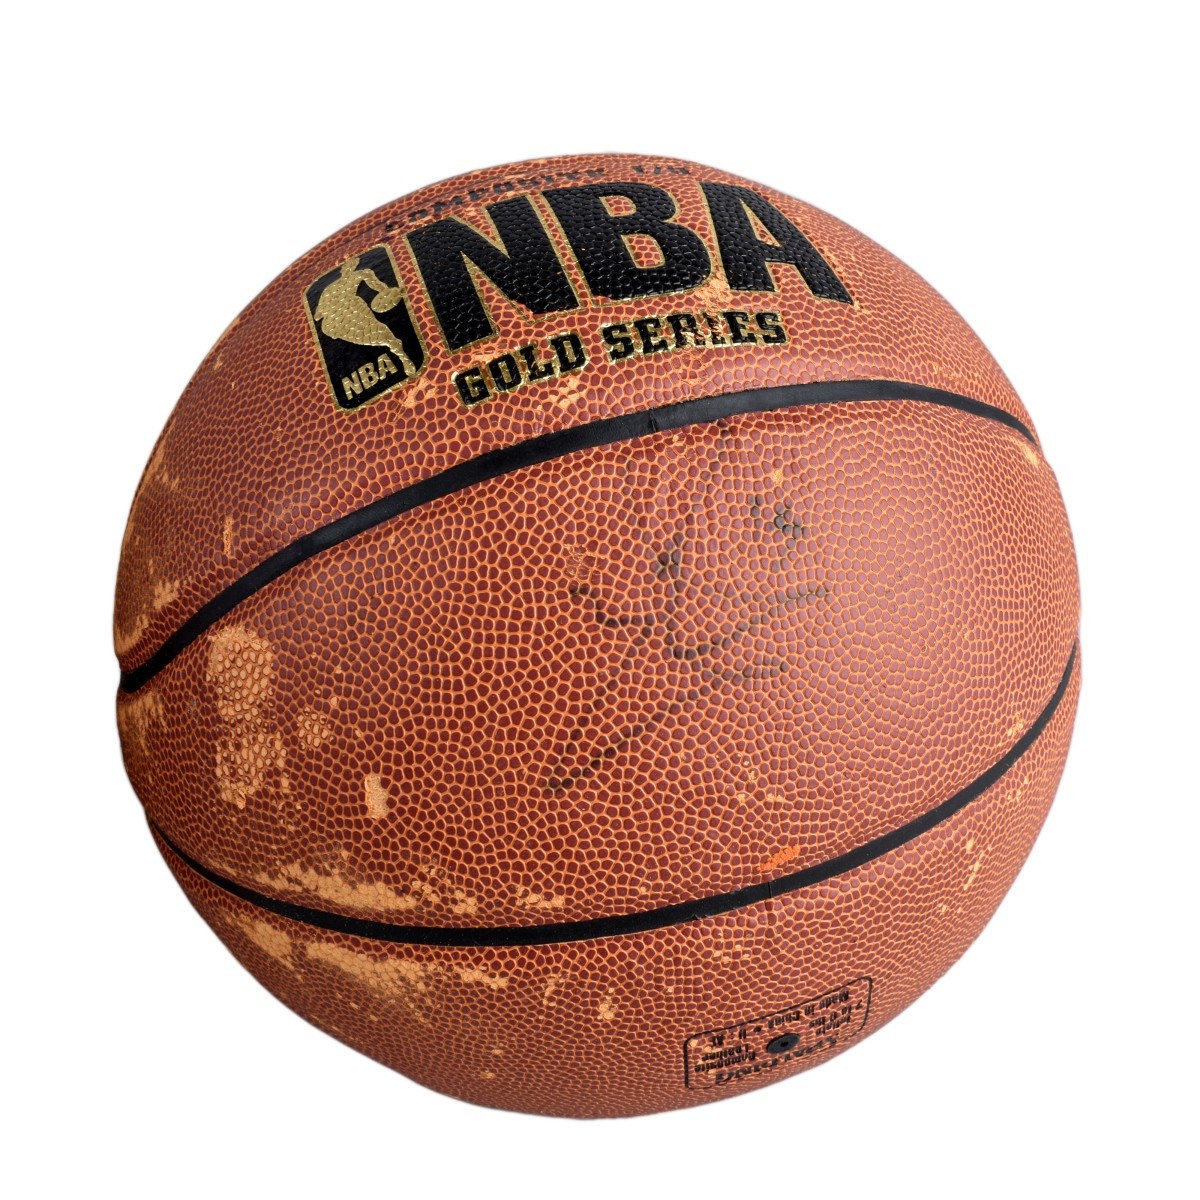 Three Autographed NBA Basketballs